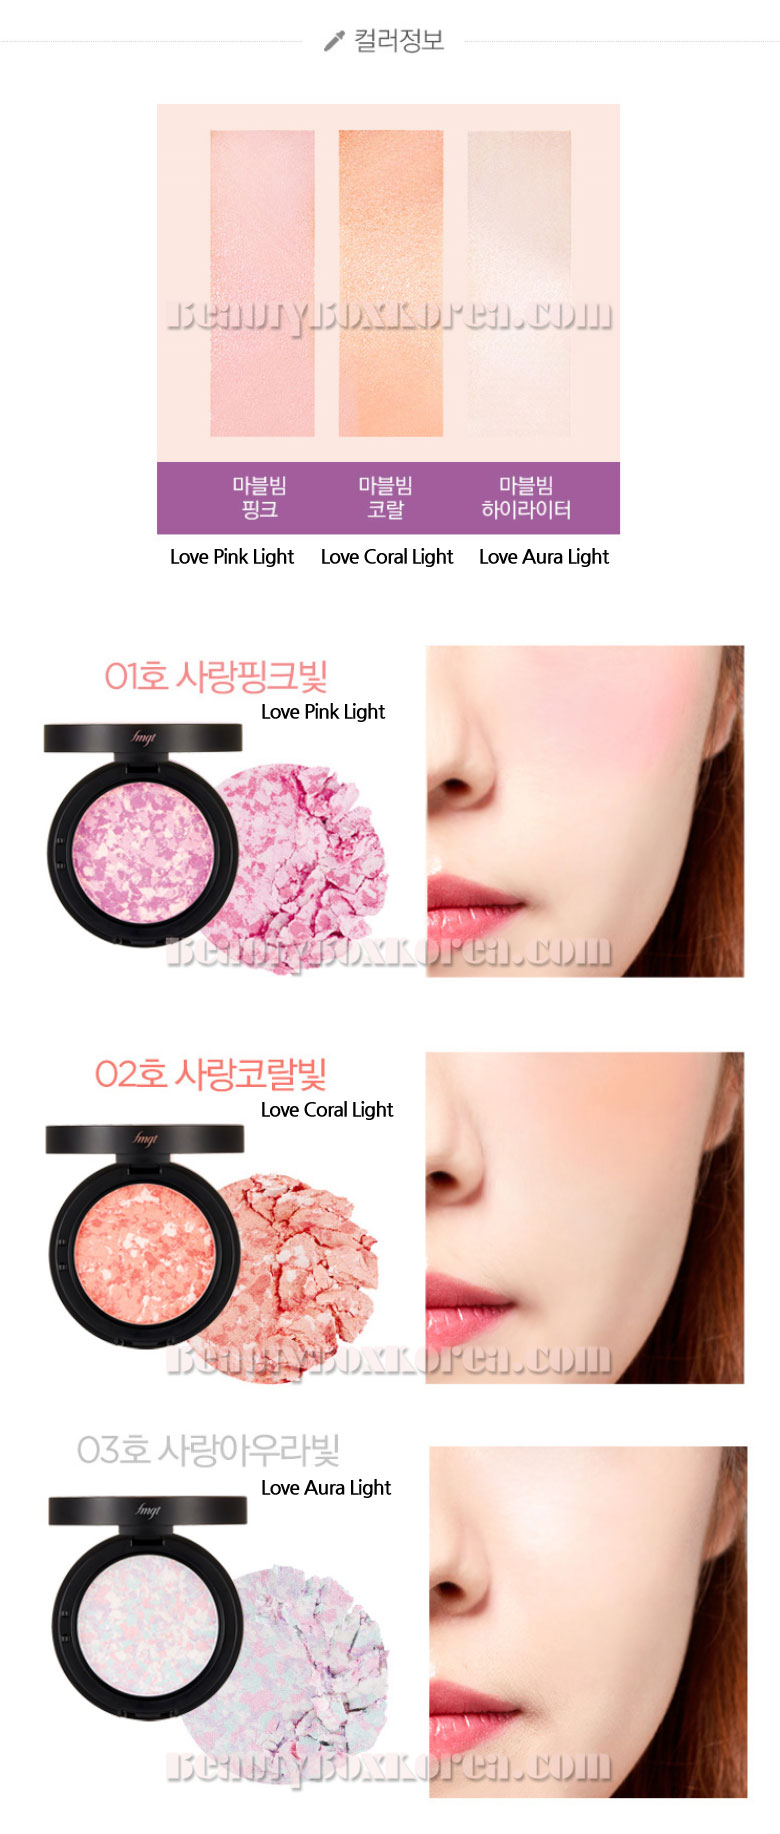 peeling Spekulerer søster THE FACE SHOP Marble Beam Blush & Highlighter 7g | Best Price and Fast  Shipping from Beauty Box Korea